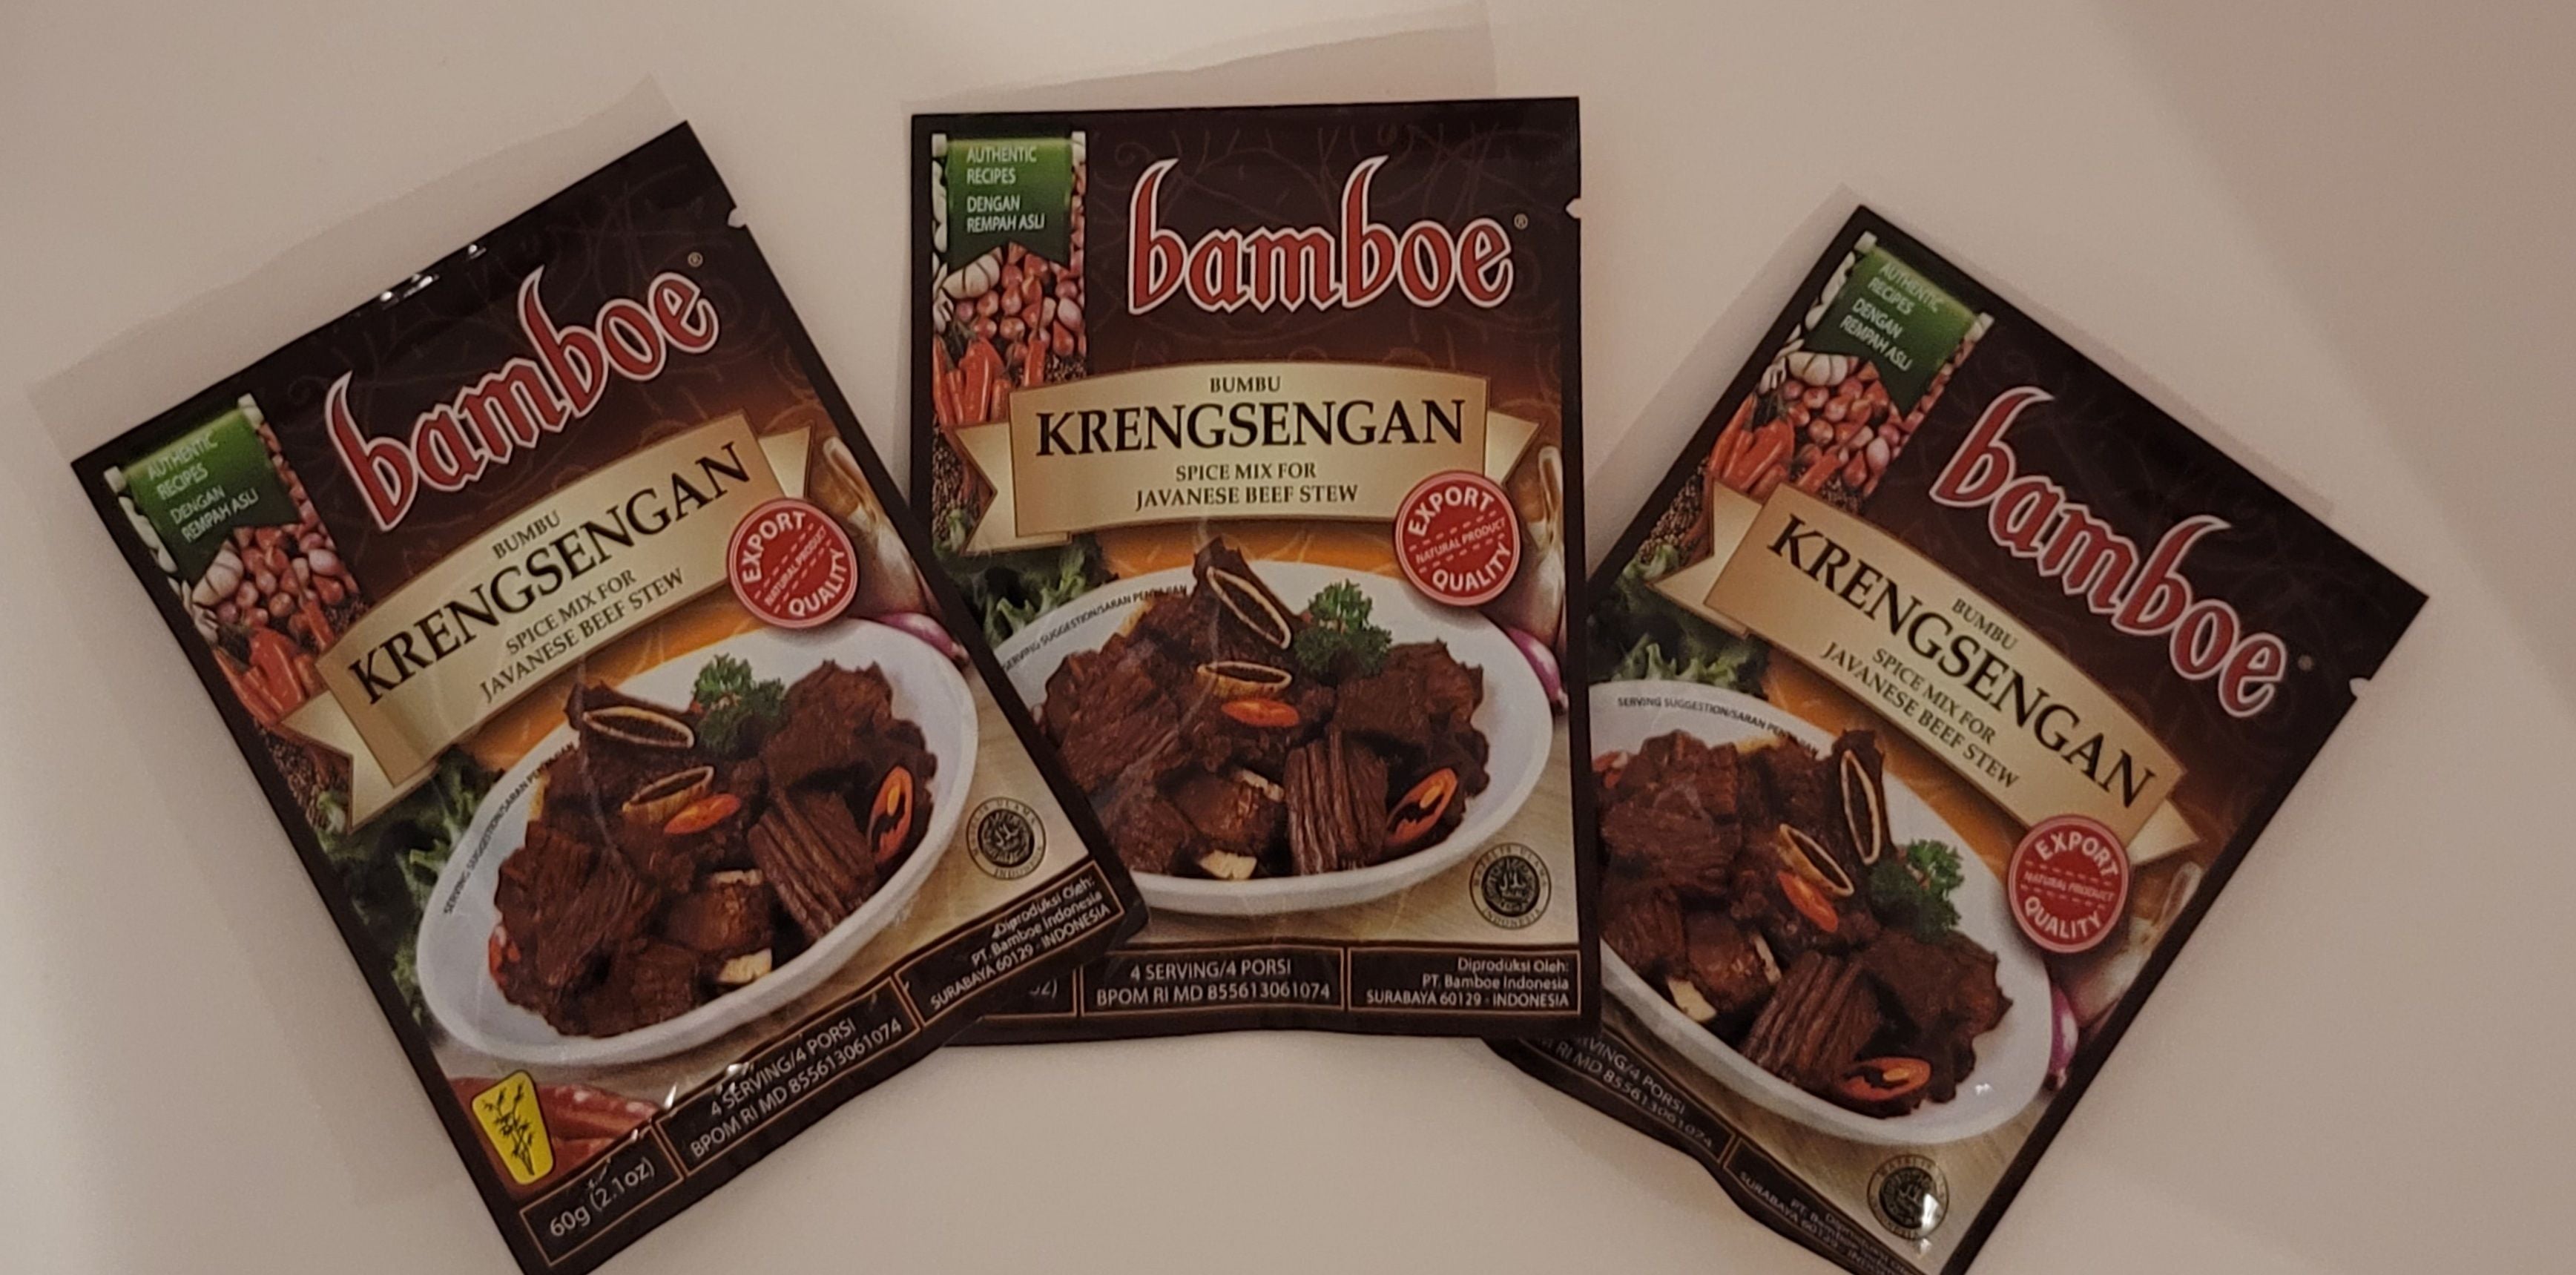 Bamboe Krengsengan (Spicy Mix for Javanese Beef Stew)